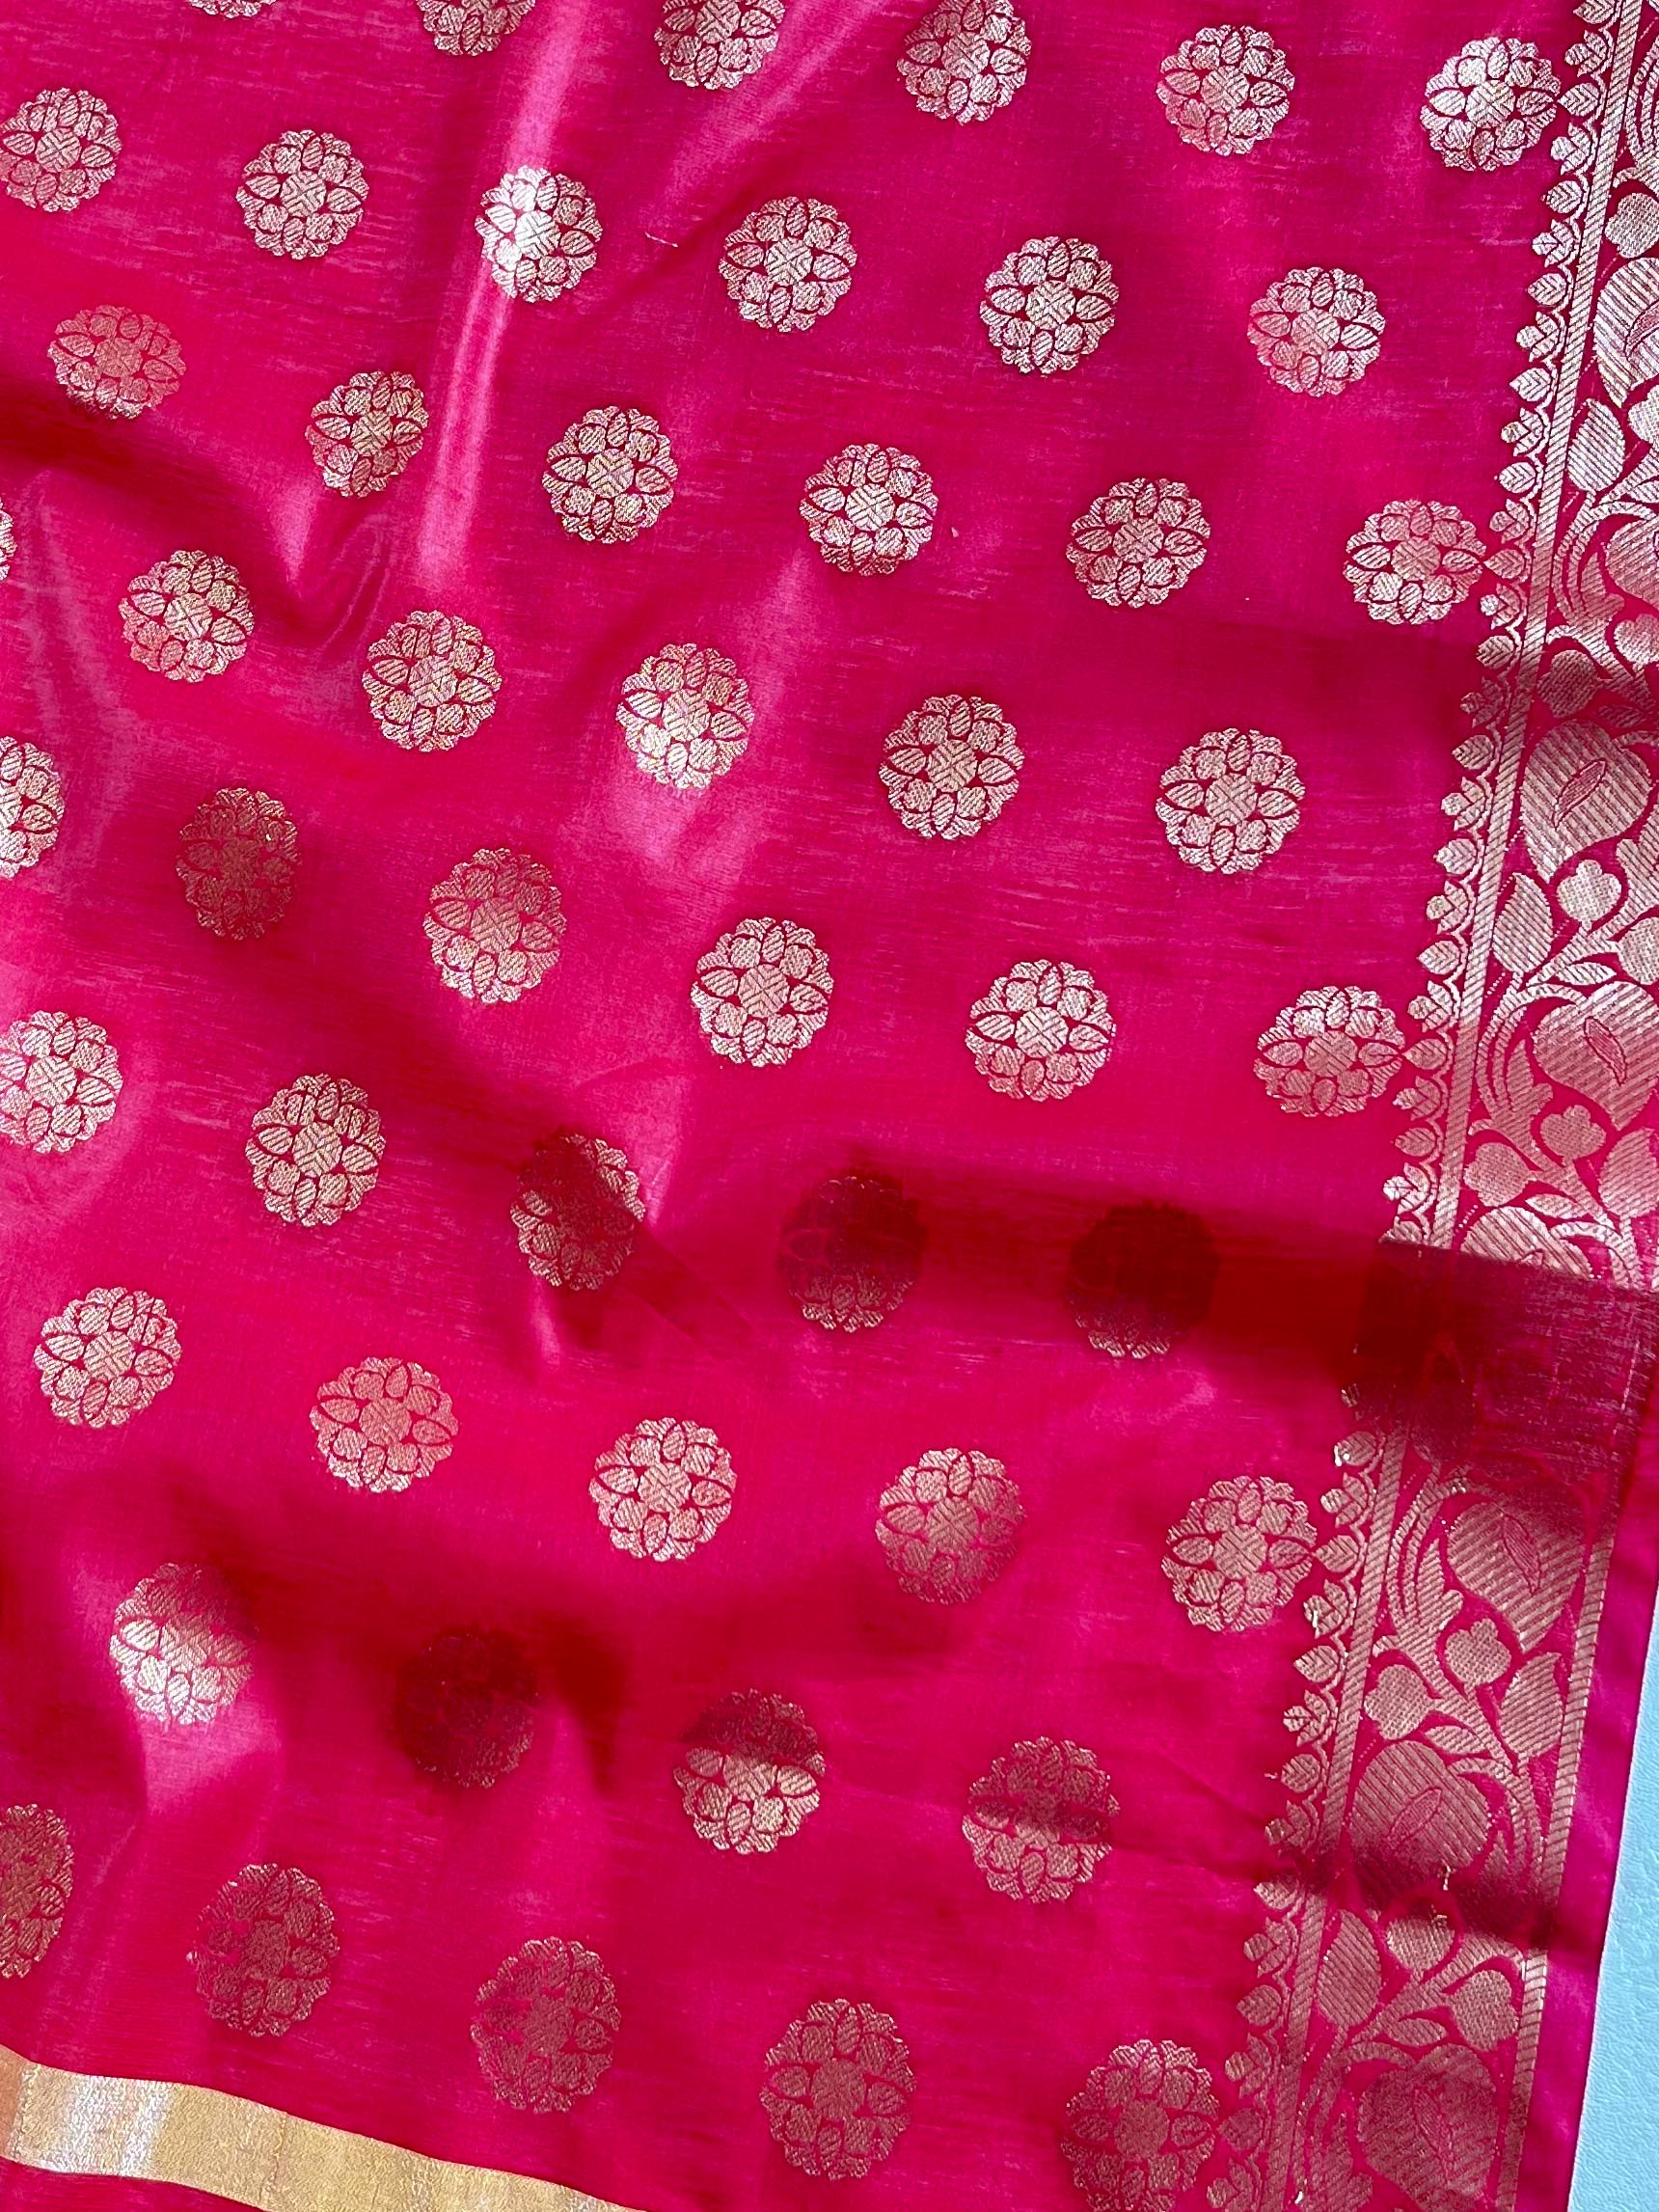 Banarasee Chanderi Cotton Buta Design Salwar Kameez Fabric With Contrast Dupatta-Sea Green & Pink